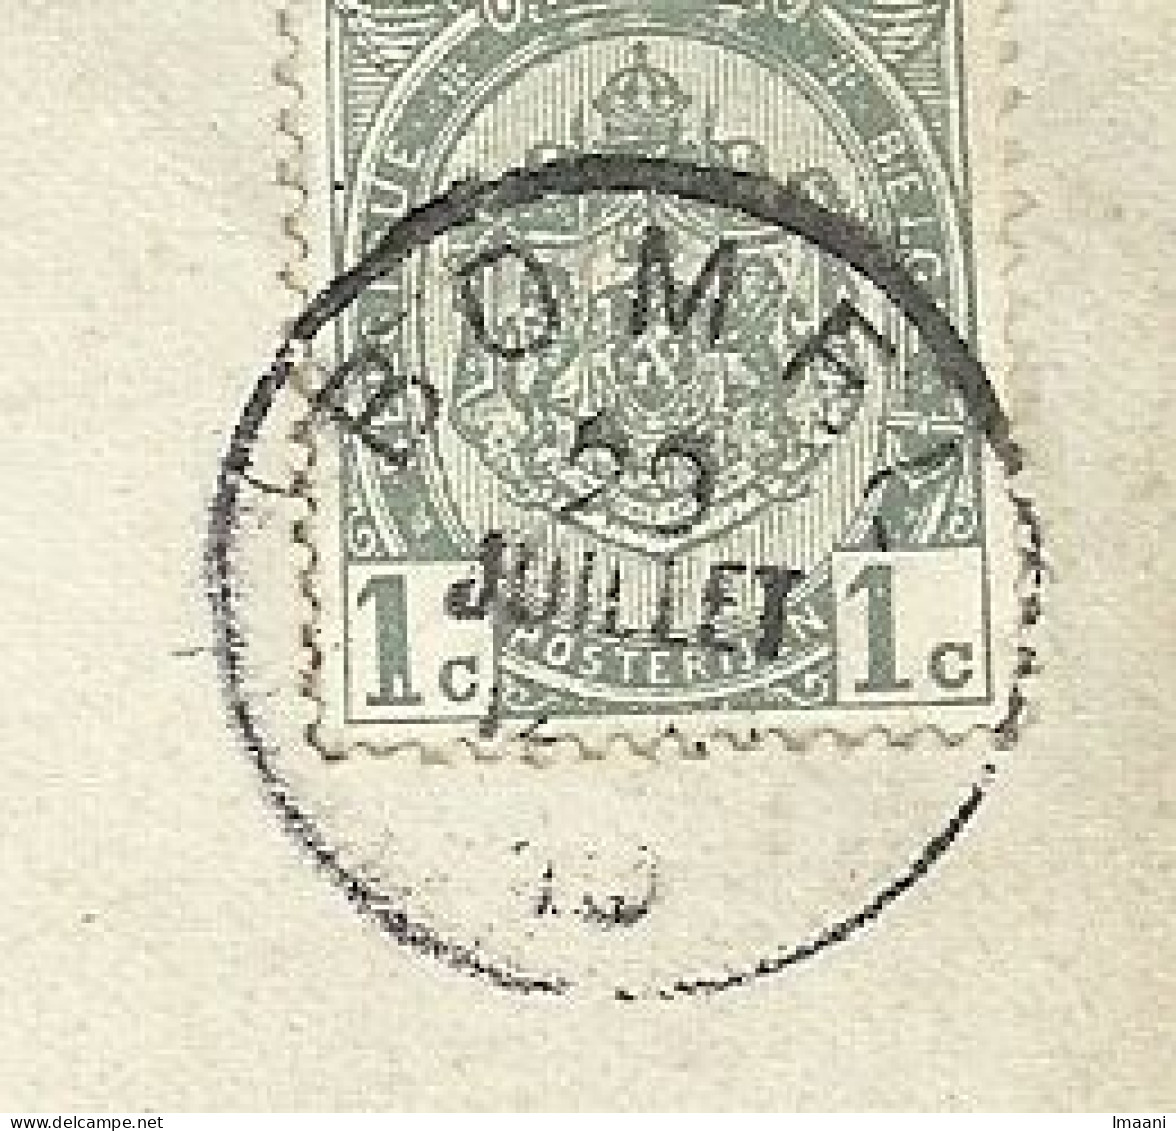 81 Op Kaart Stempel BOMEL  (coba 50) (K5489) - 1893-1907 Coat Of Arms